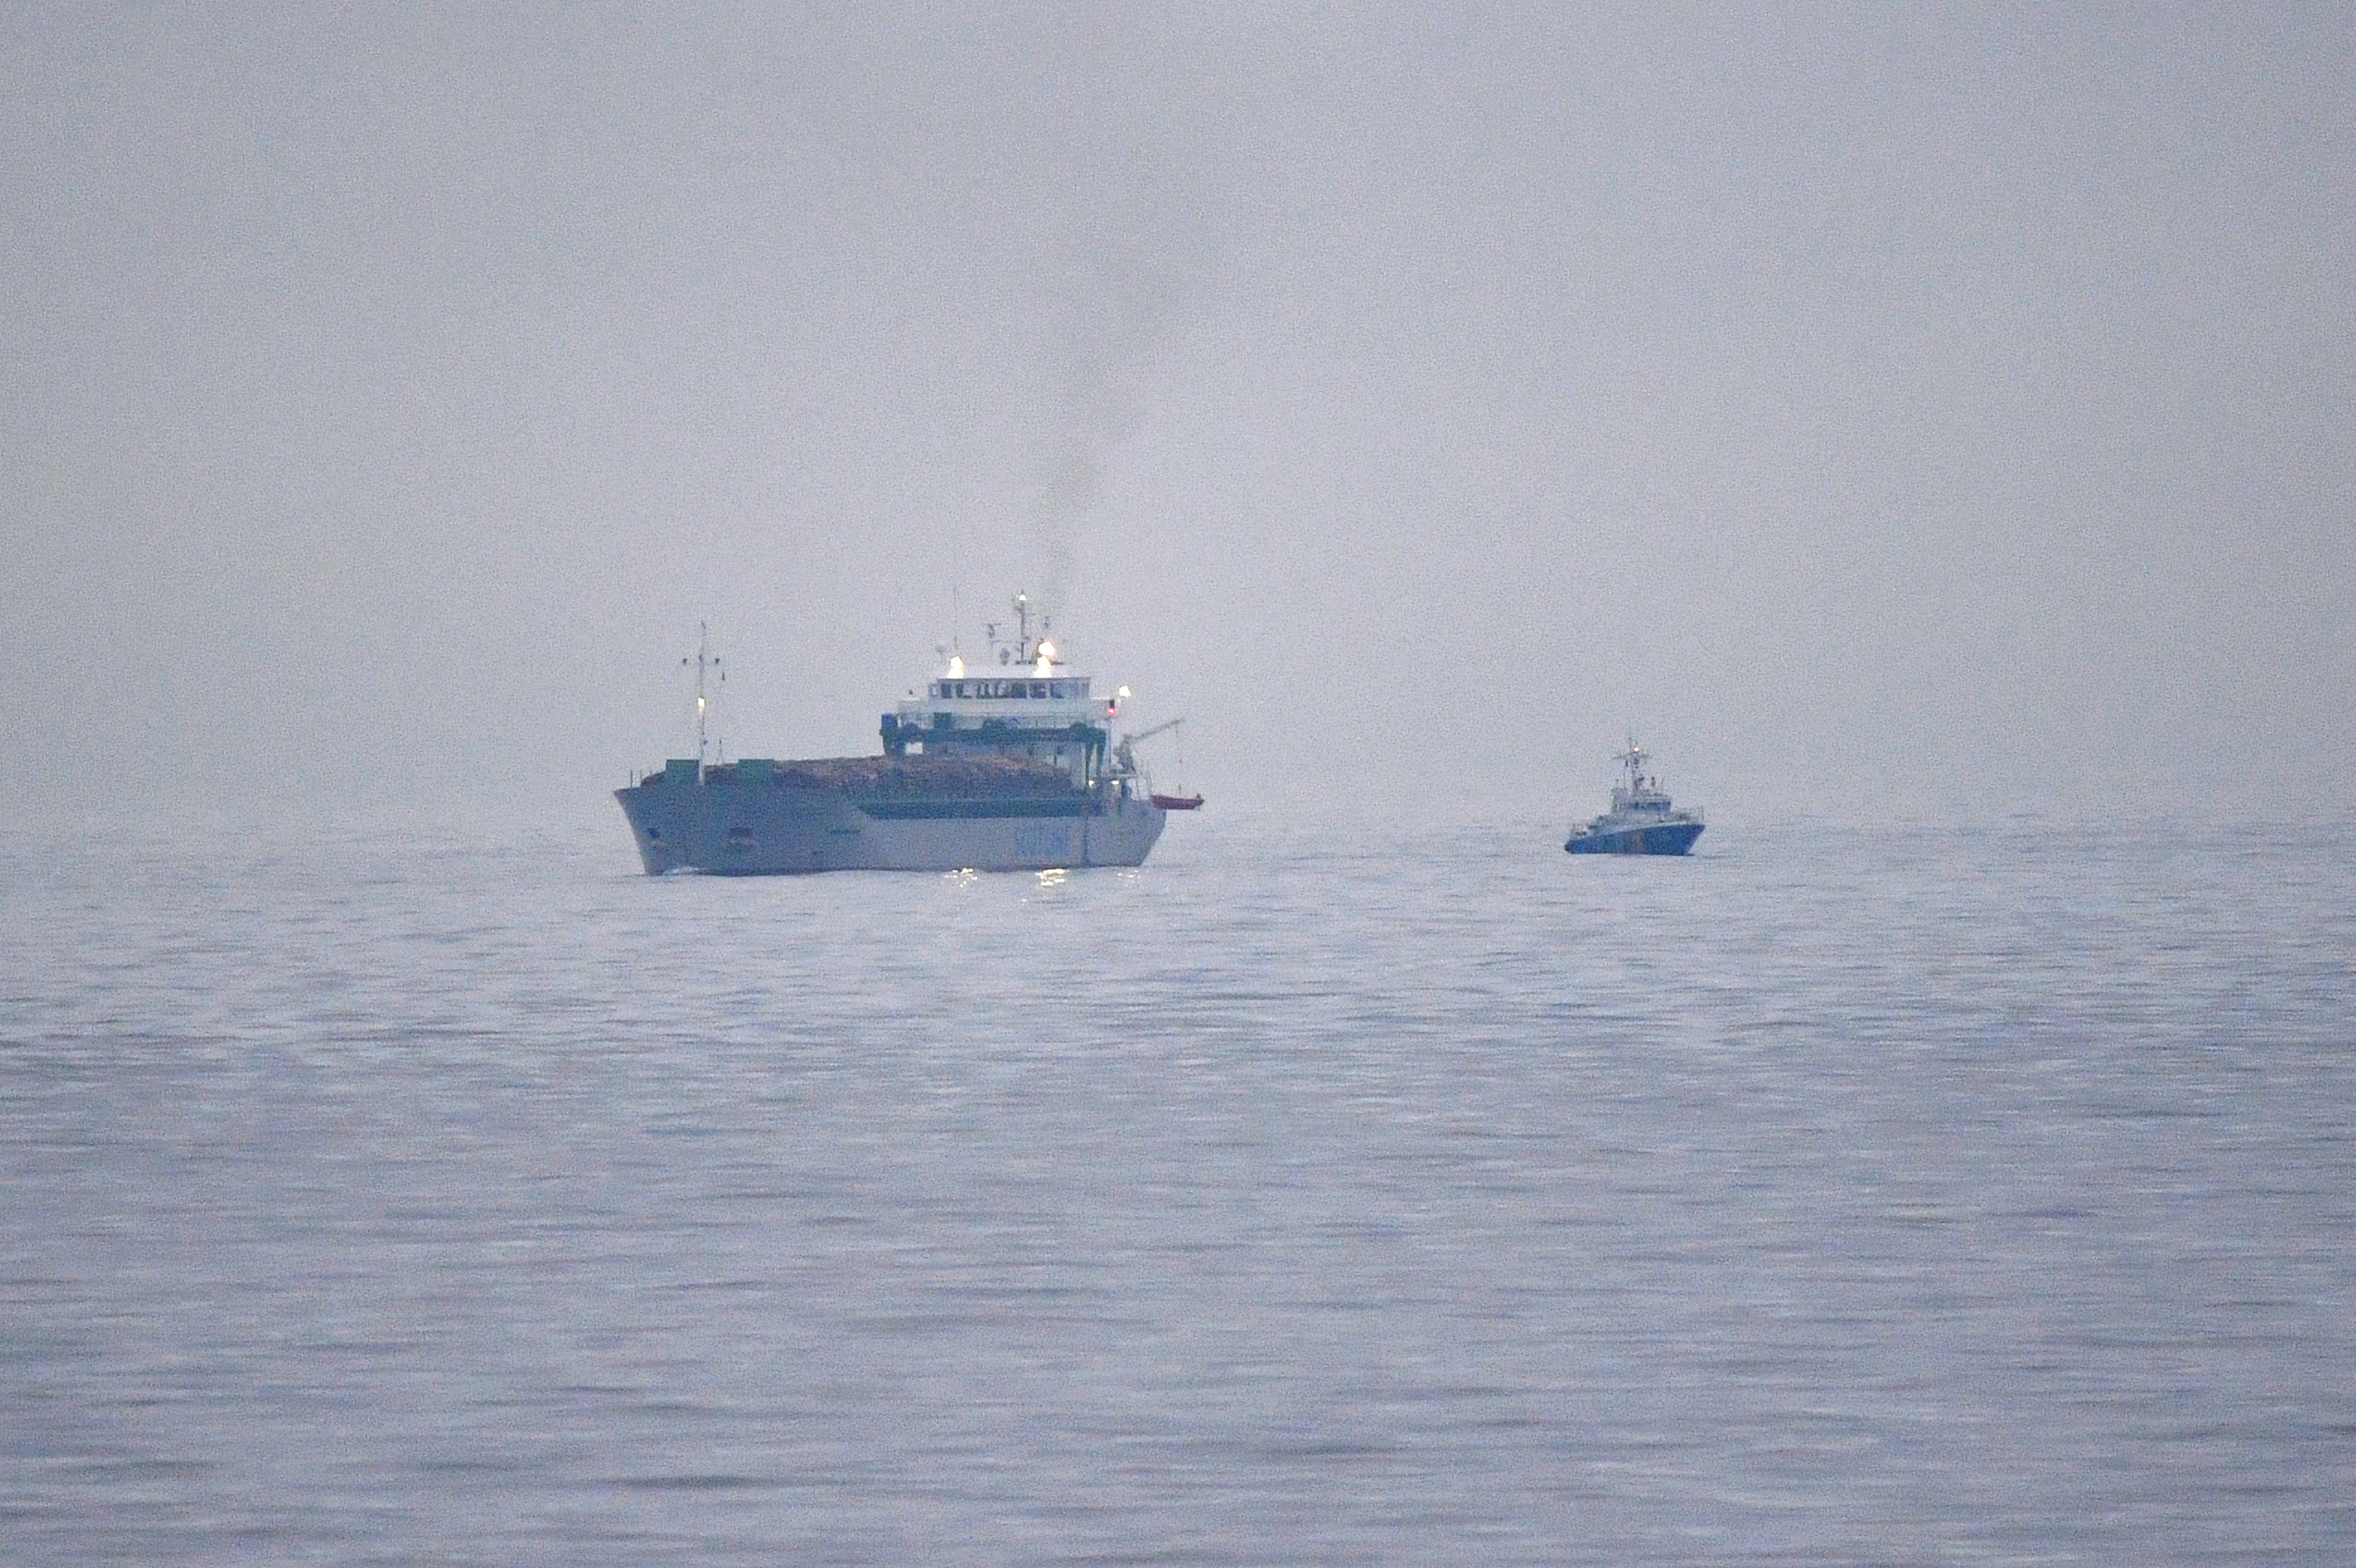 Cargo ships collide in Baltic Sea